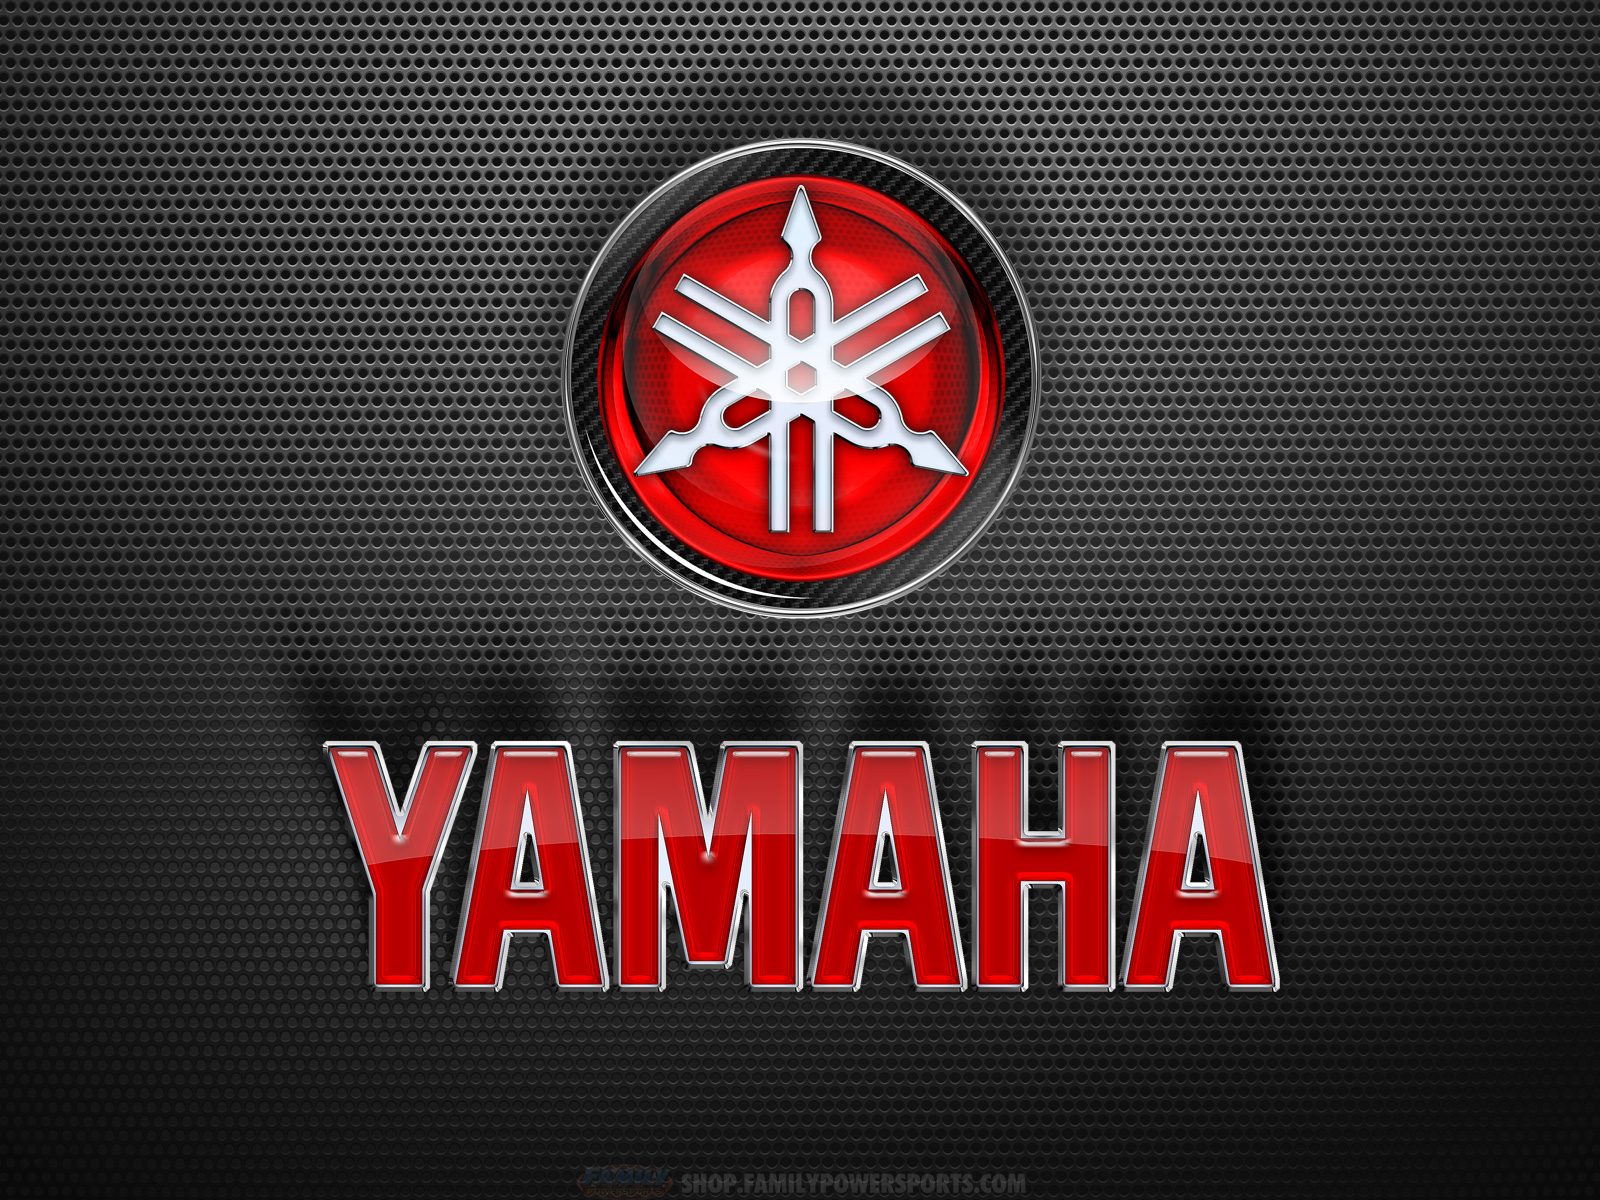 Yamaha Logo Wallpaper - WallpaperSafari